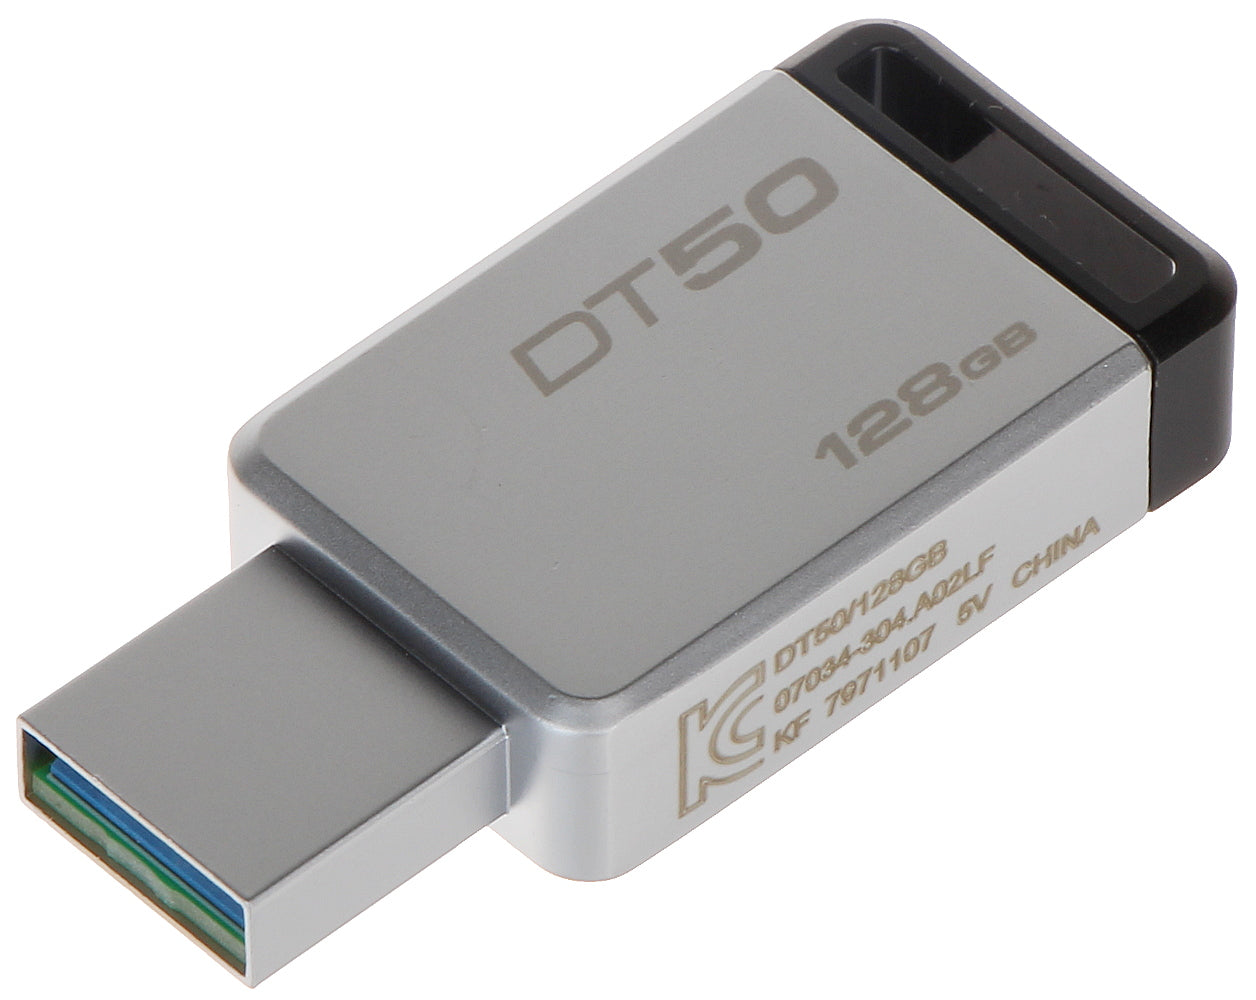 Pendrive Kingston Data Traveler 50 128GB USB 3.0